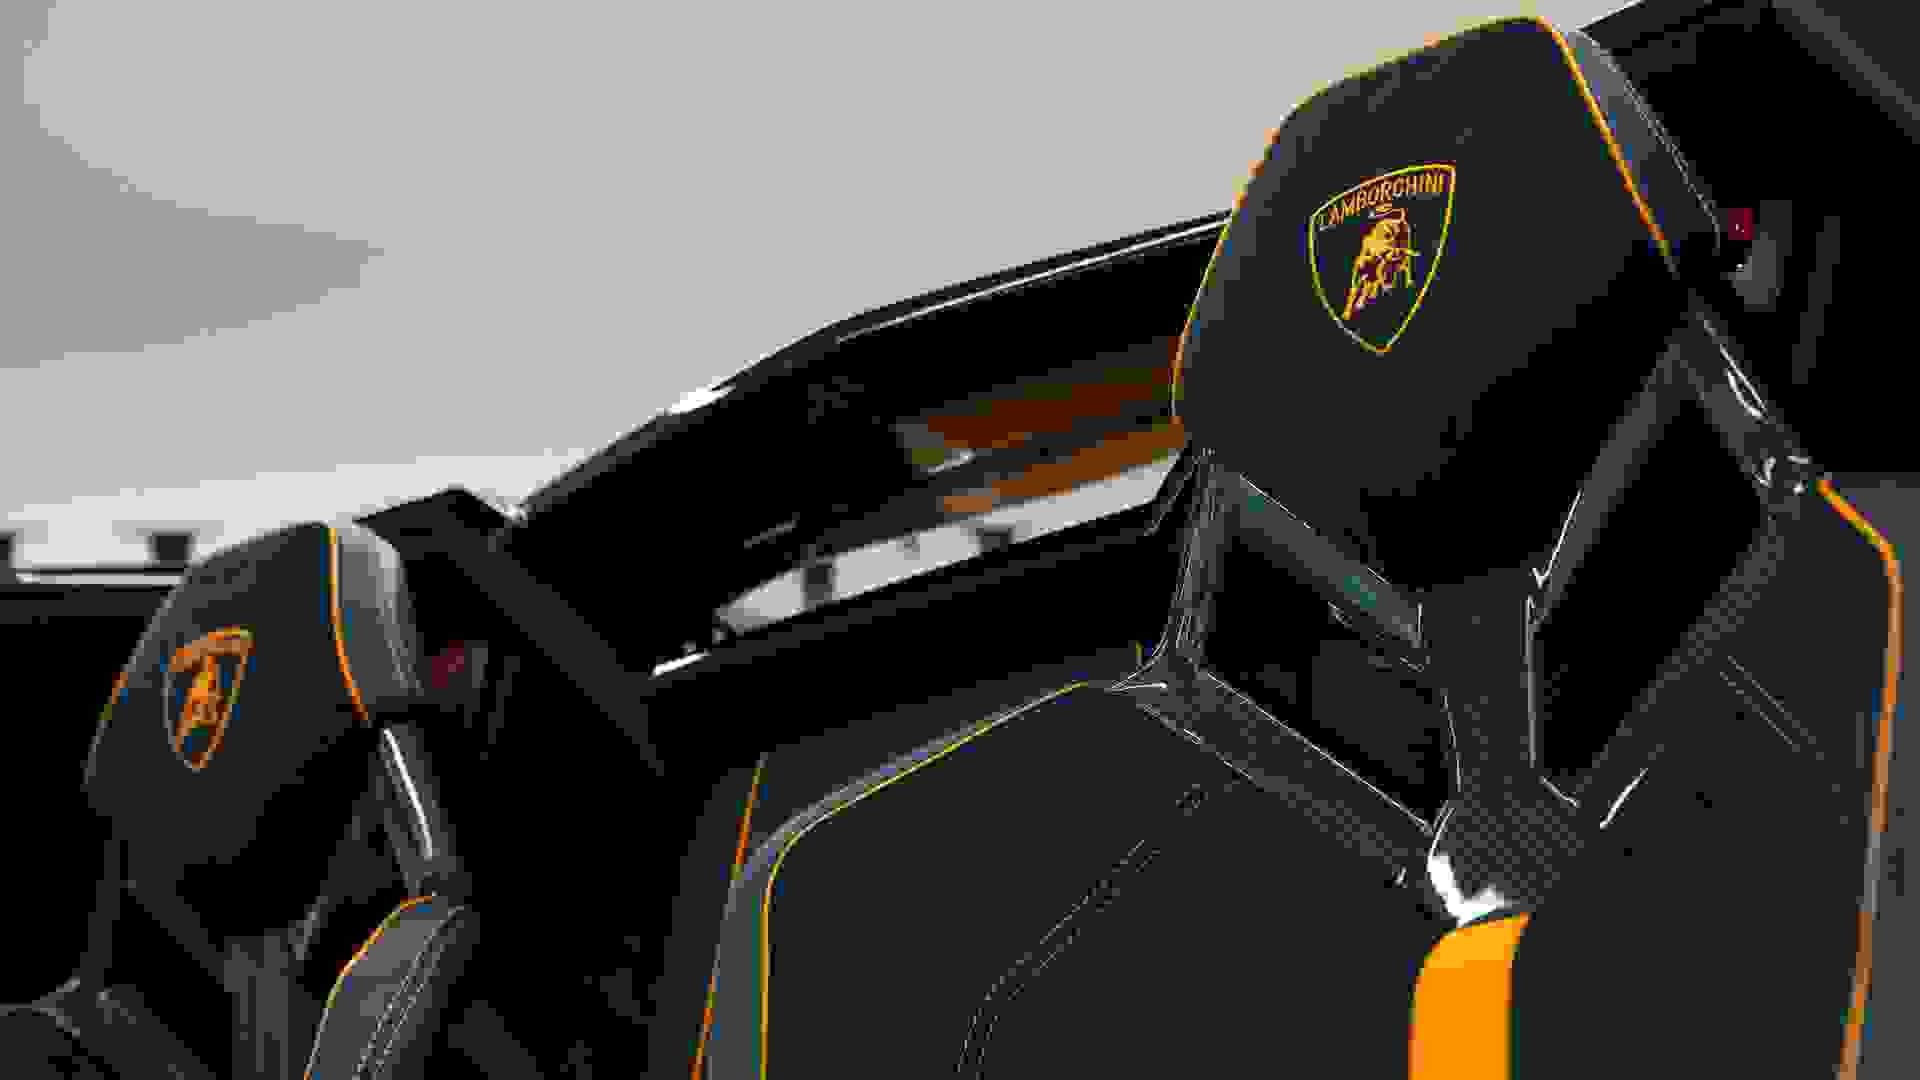 Lamborghini AVENTADOR SV Photo 019dbff0-ddb6-42e0-a948-64f82d26c664.jpg